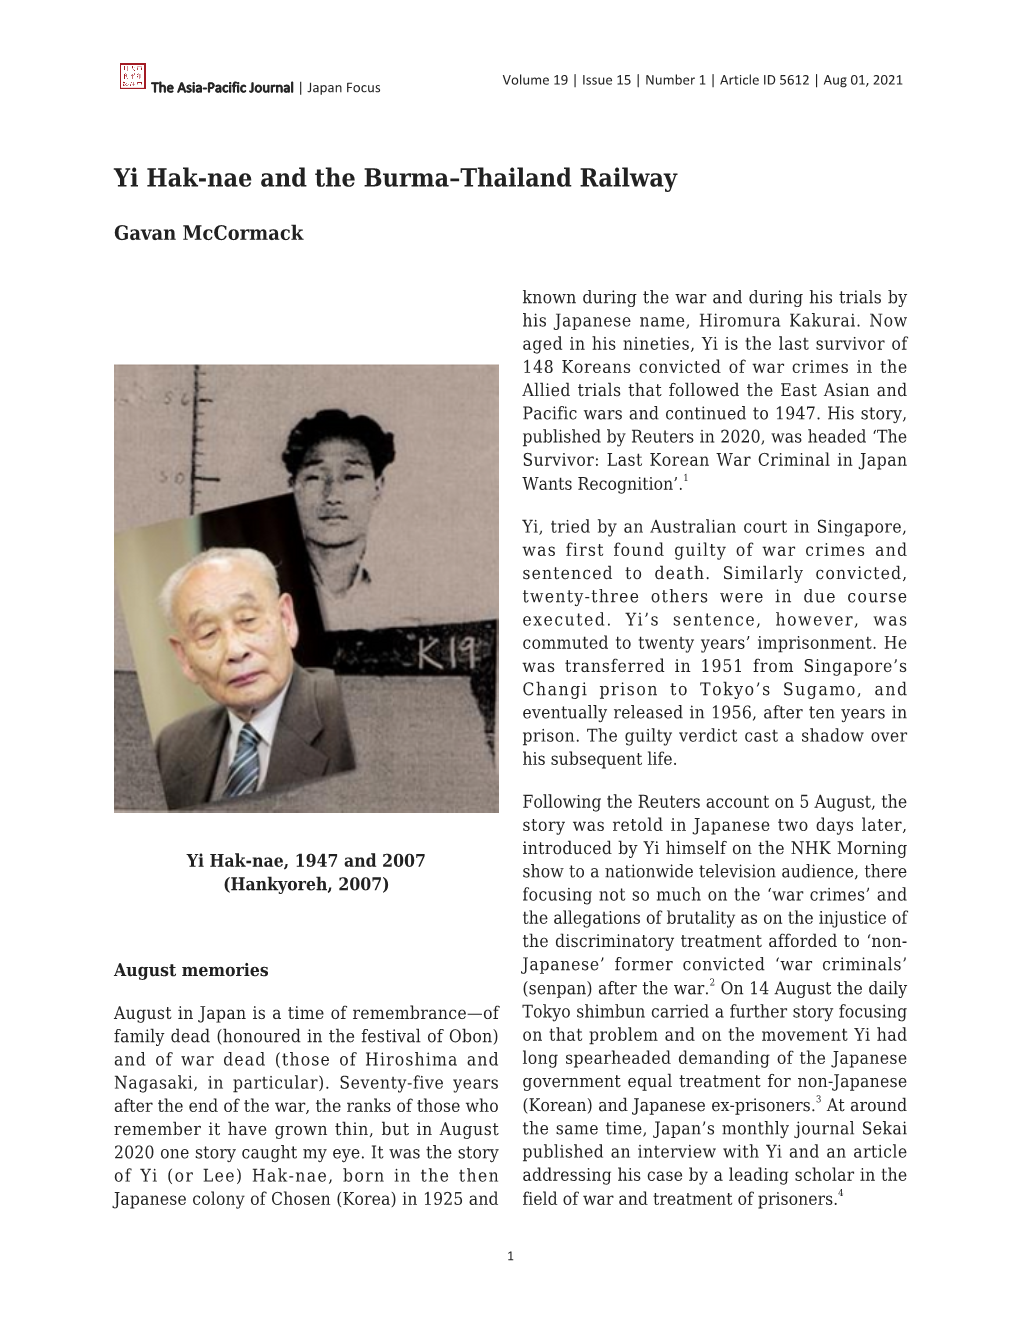 Yi Hak-Nae and the Burma–Thailand Railway